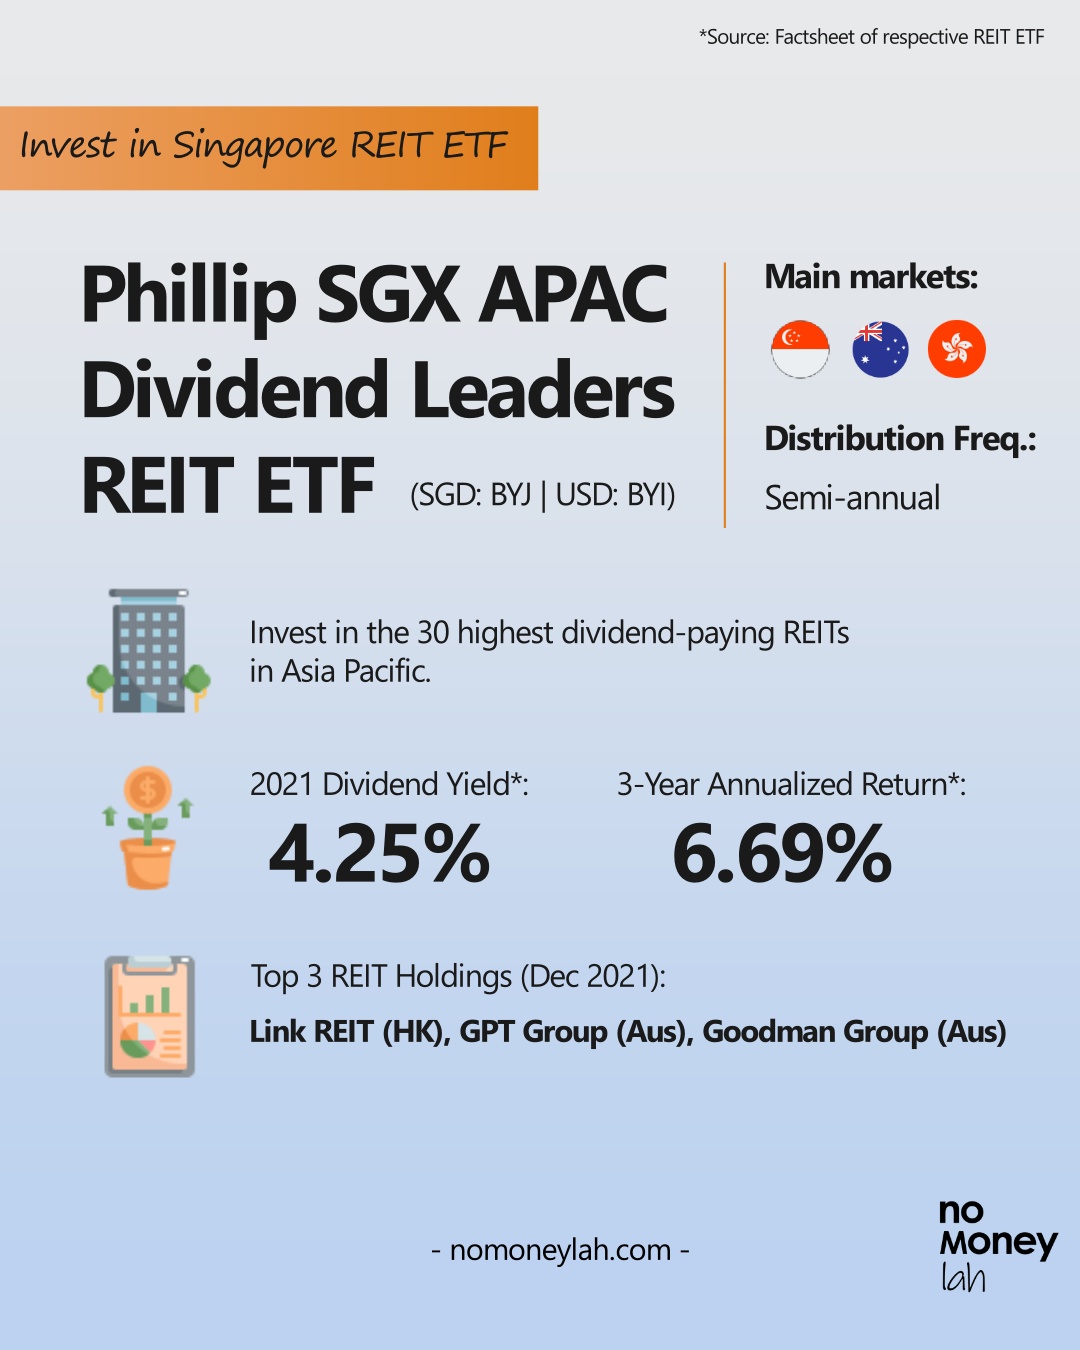 Phillip SGX APAC Dividend Leaders REIT ETF